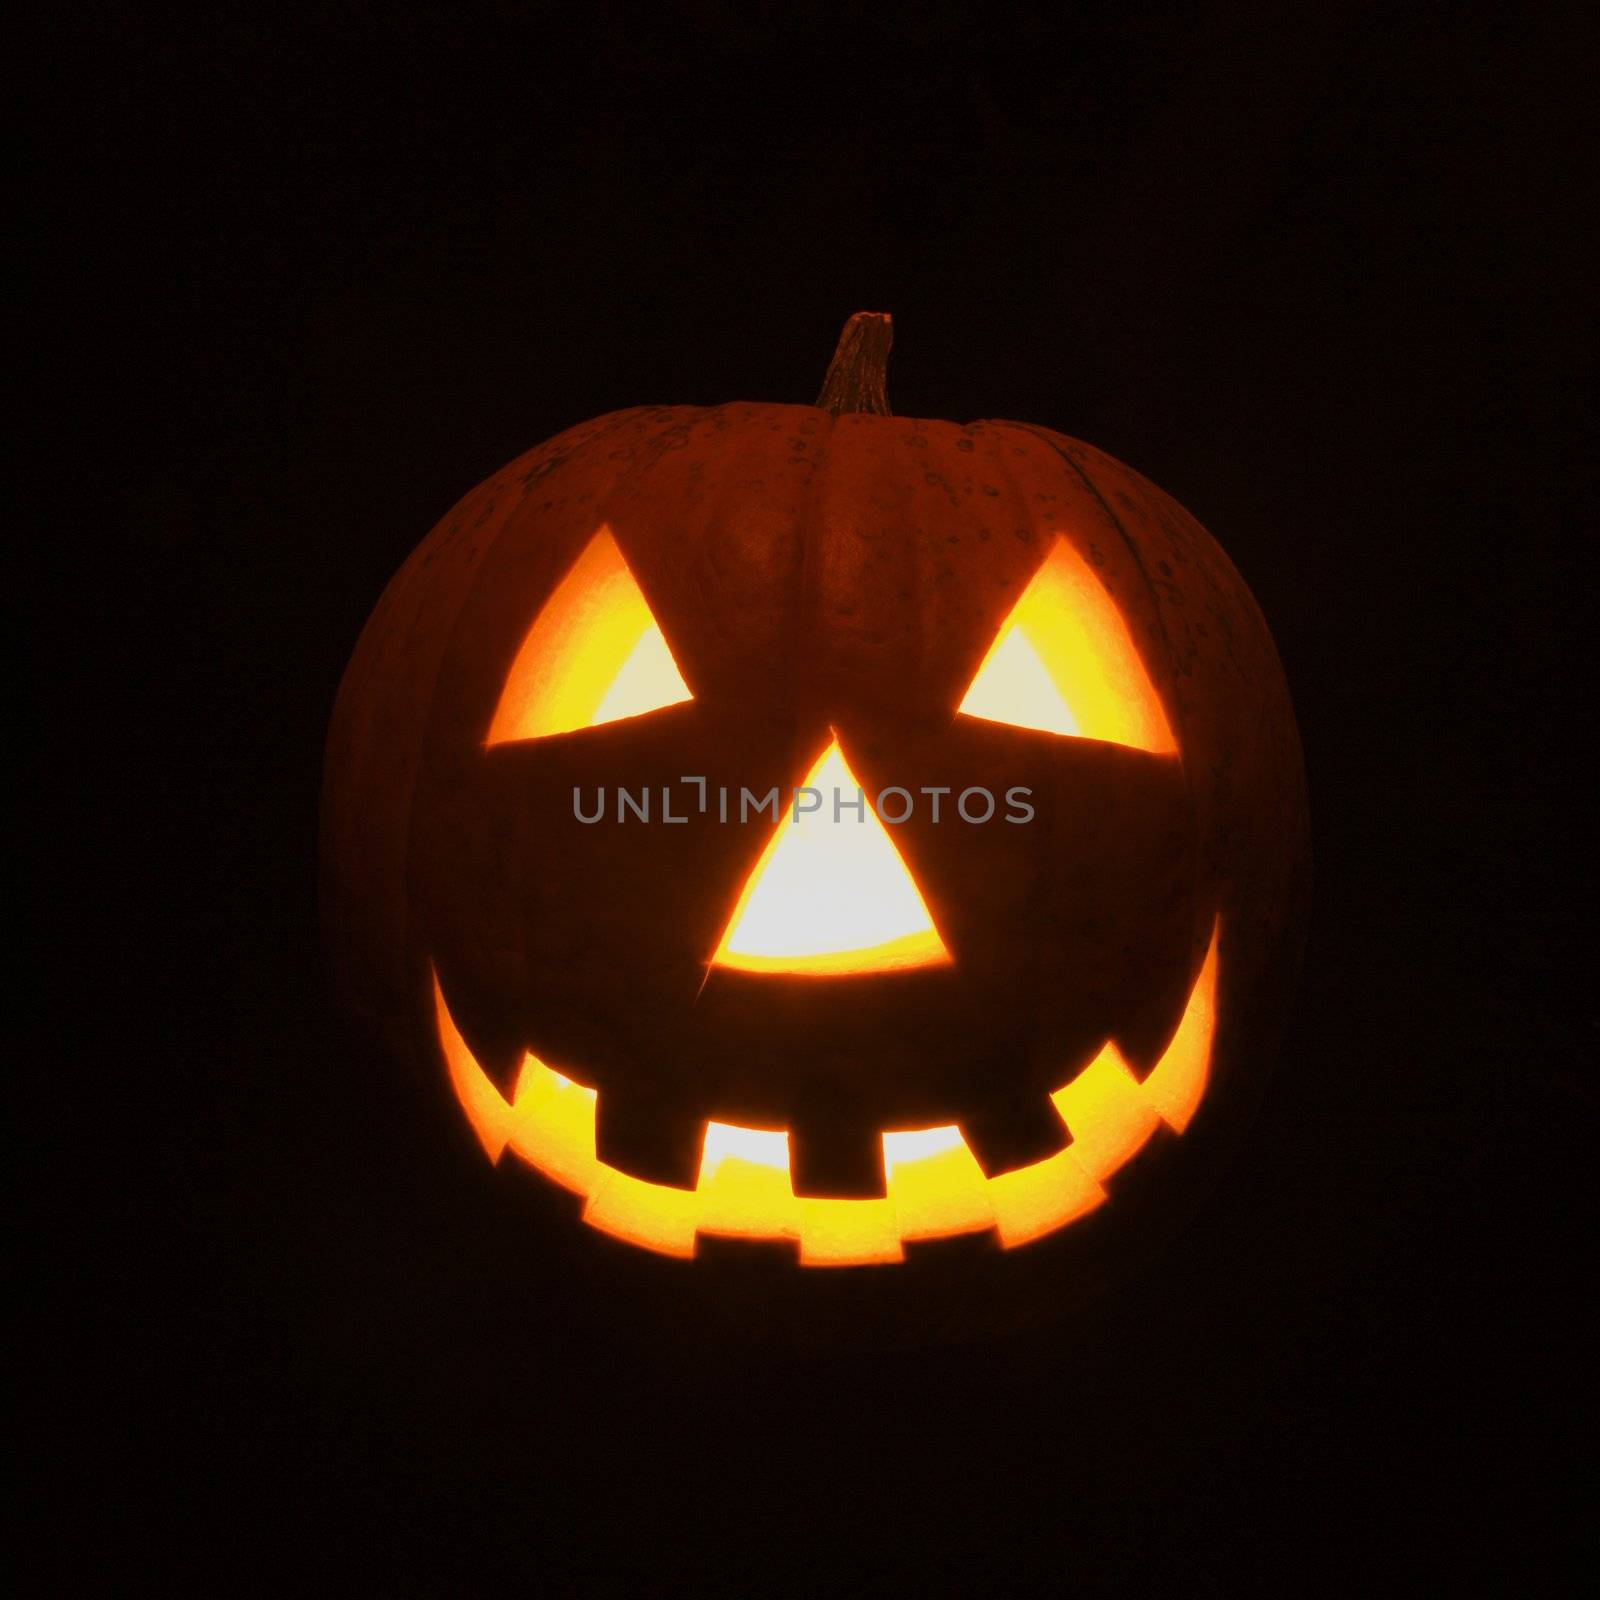 Carved Halloween pumpkin glowing in the dark.